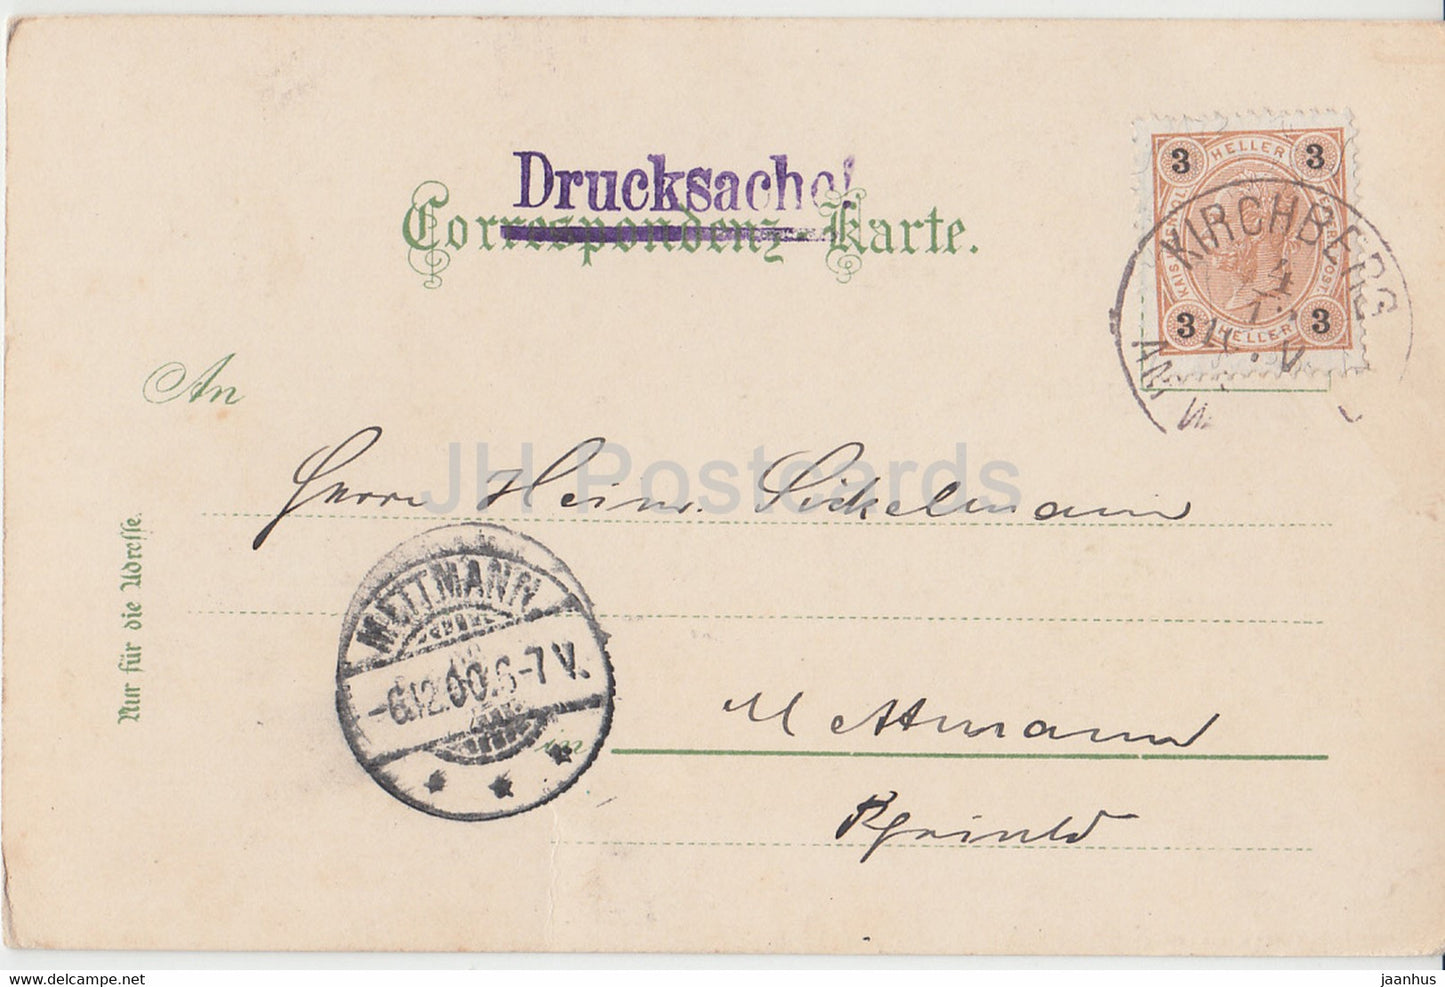 Gruss aus dem Semmering Gebiet - Polleroswand u Raxalp - Drucksache - carte postale ancienne - 1900 - Autriche - utilisé